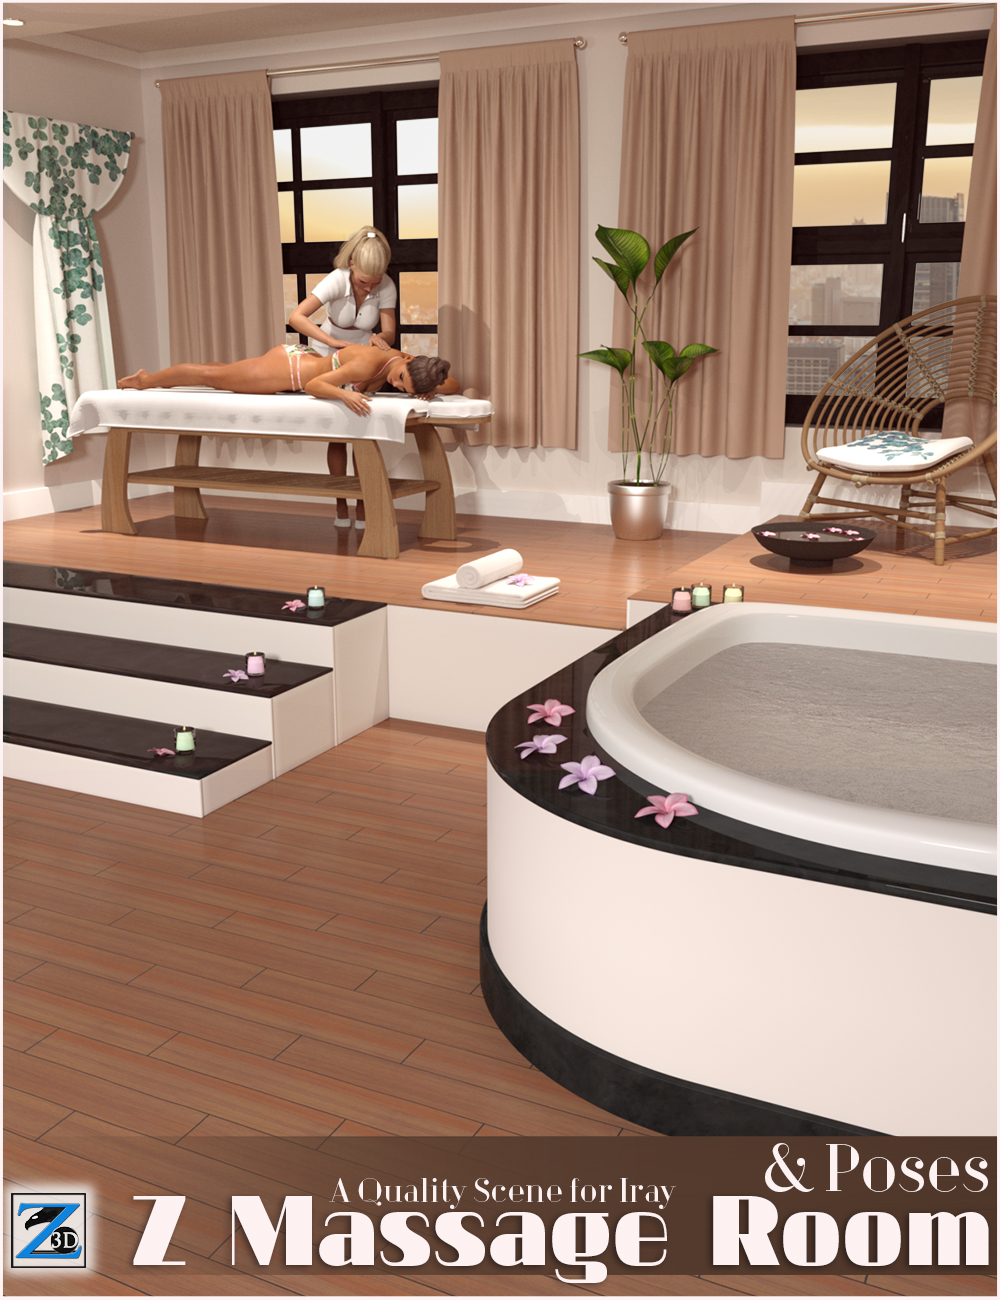 Z Massage Room & Poses by: Zeddicuss, 3D Models by Daz 3D